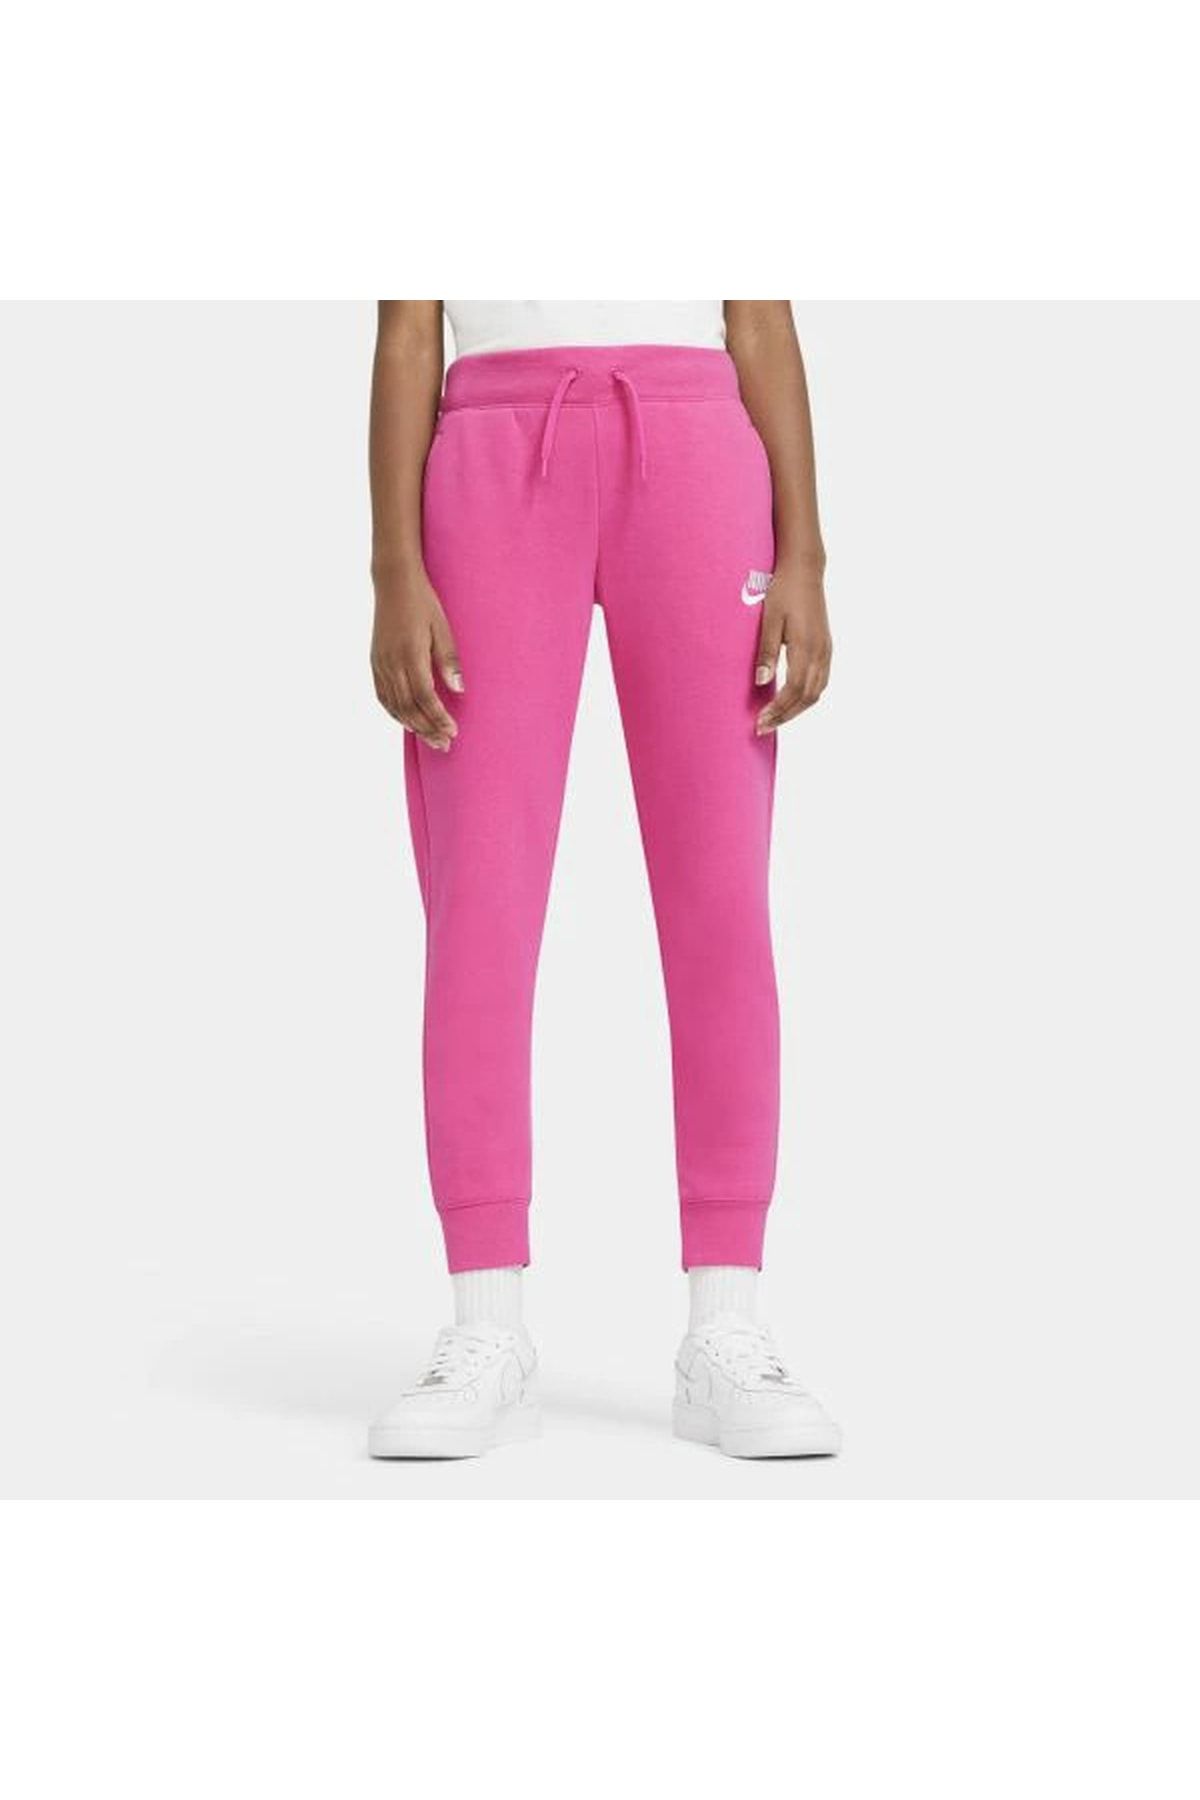 Nike Sports Sweatpants - Pink - Normal Waist - Trendyol